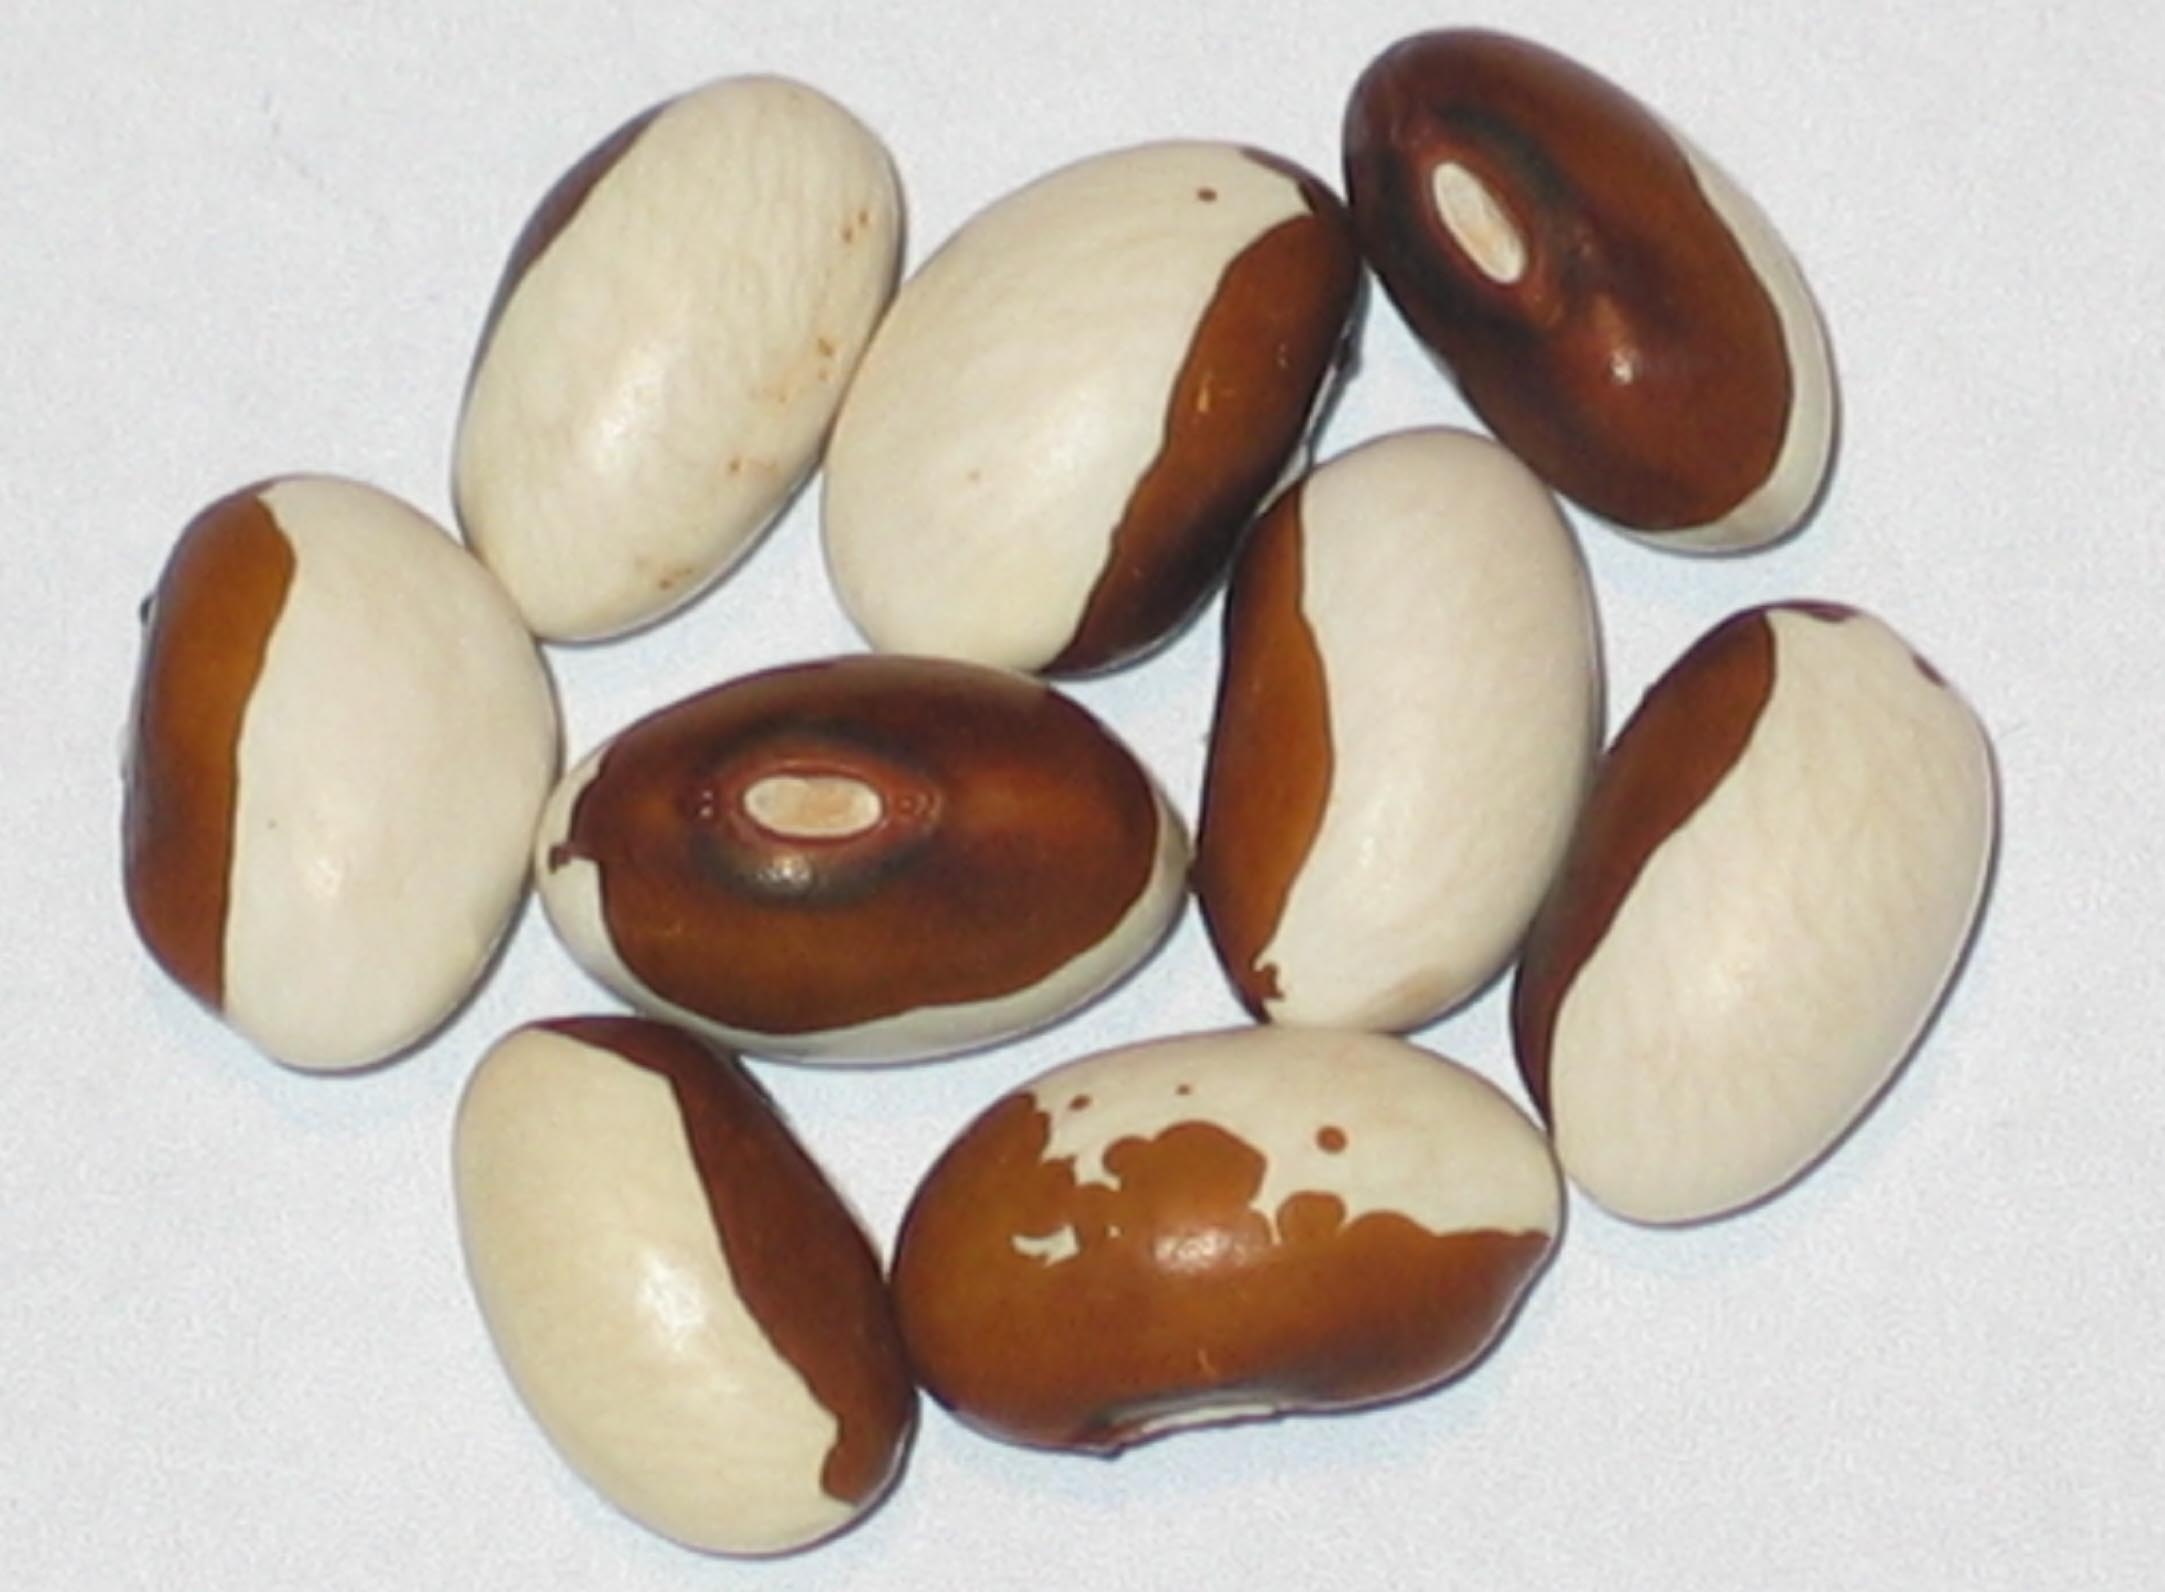 image of Brauner Bar beans